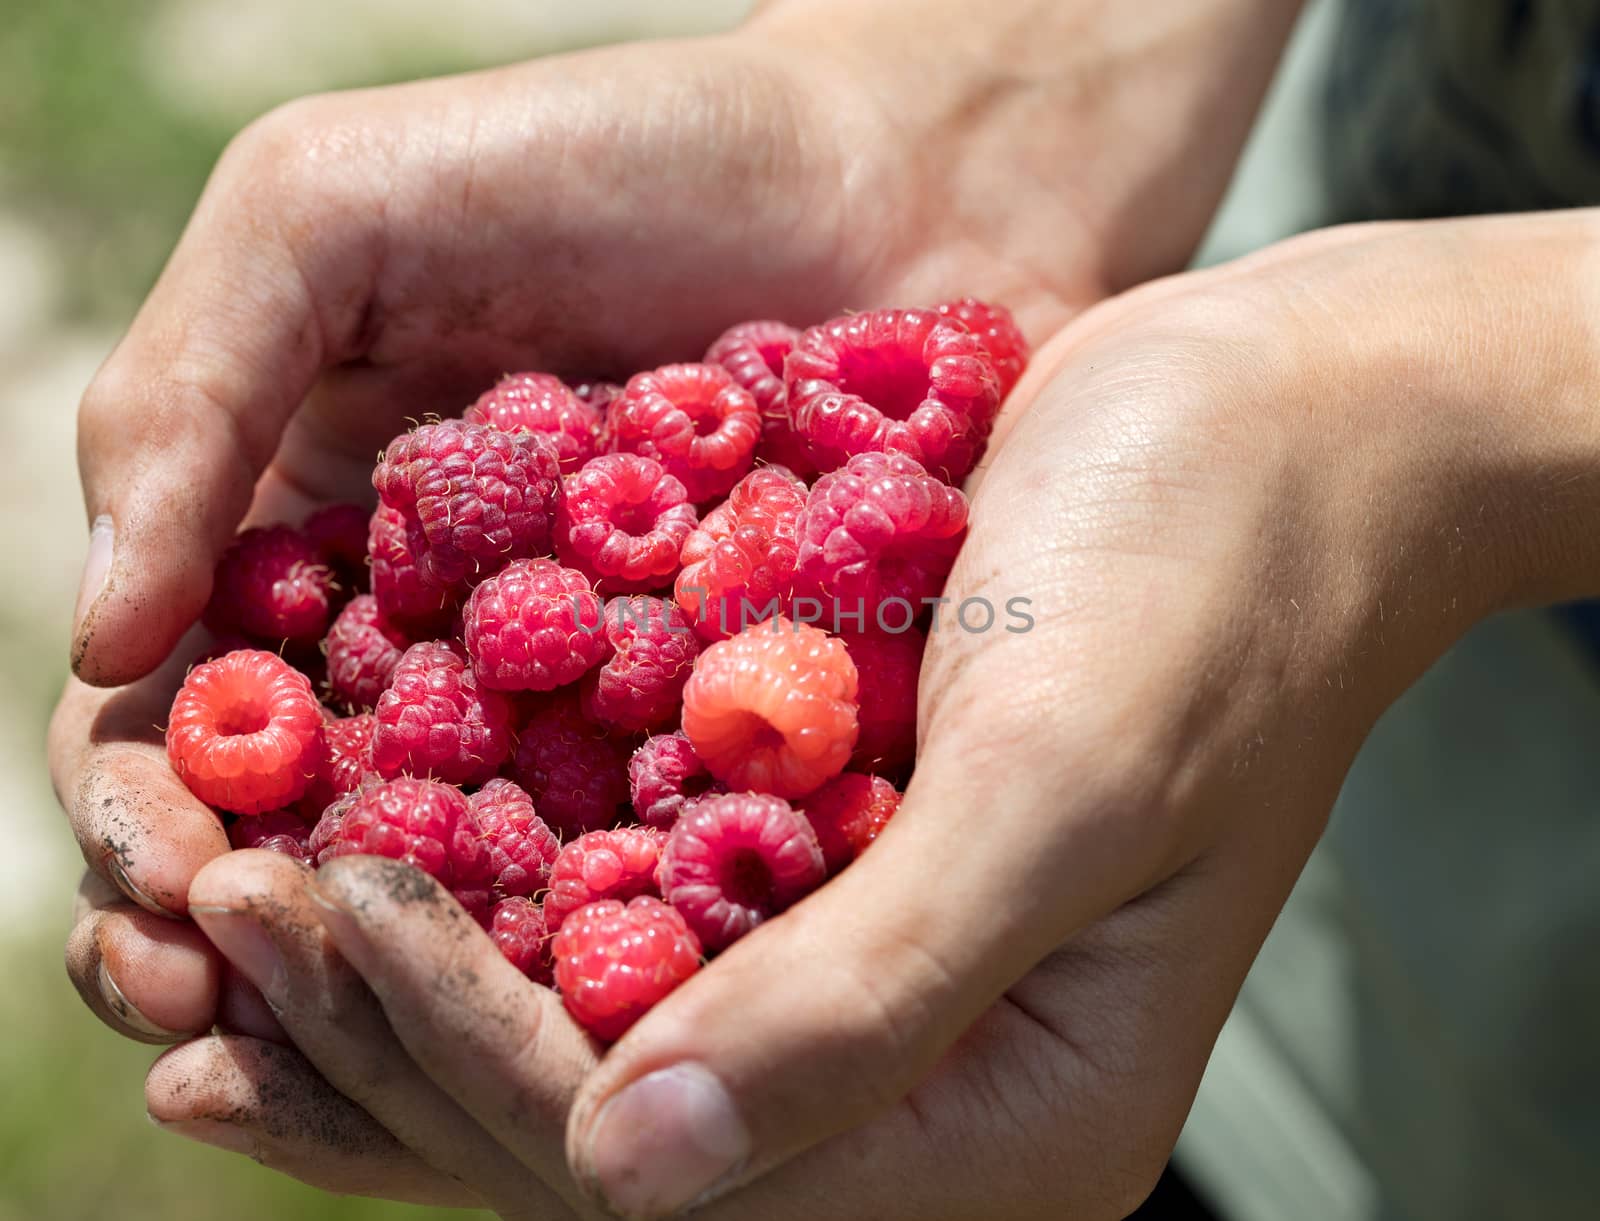 Handful of red ripe raspberries in hands close up in sunlight